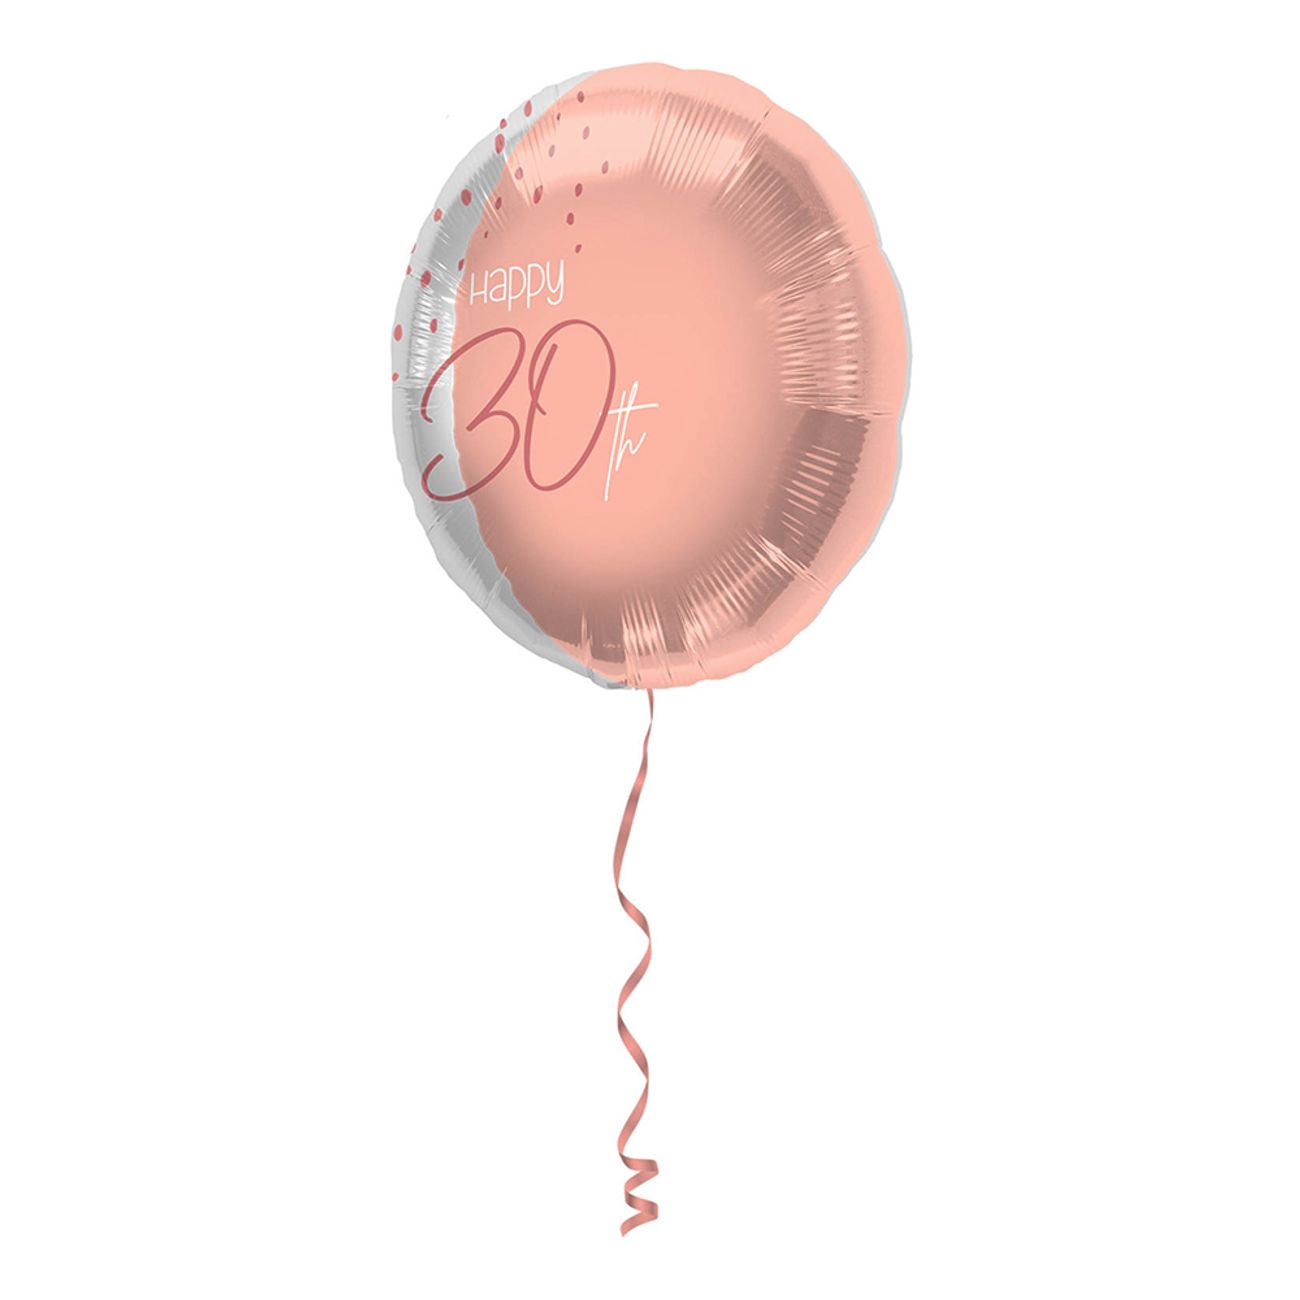 folieballong-happy-30th-lush-blush-1